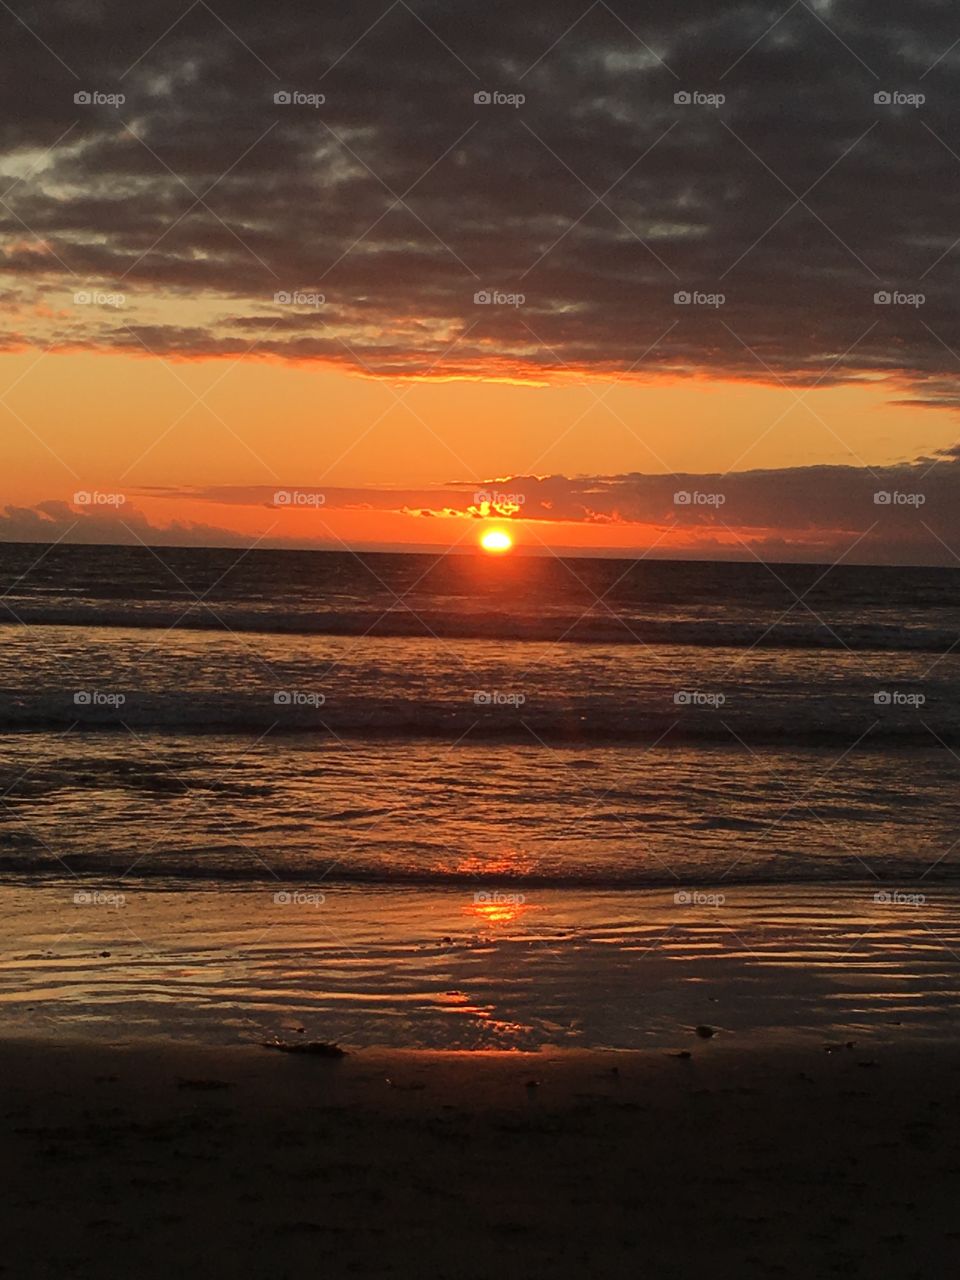 sunset on the ocean 
CA USA